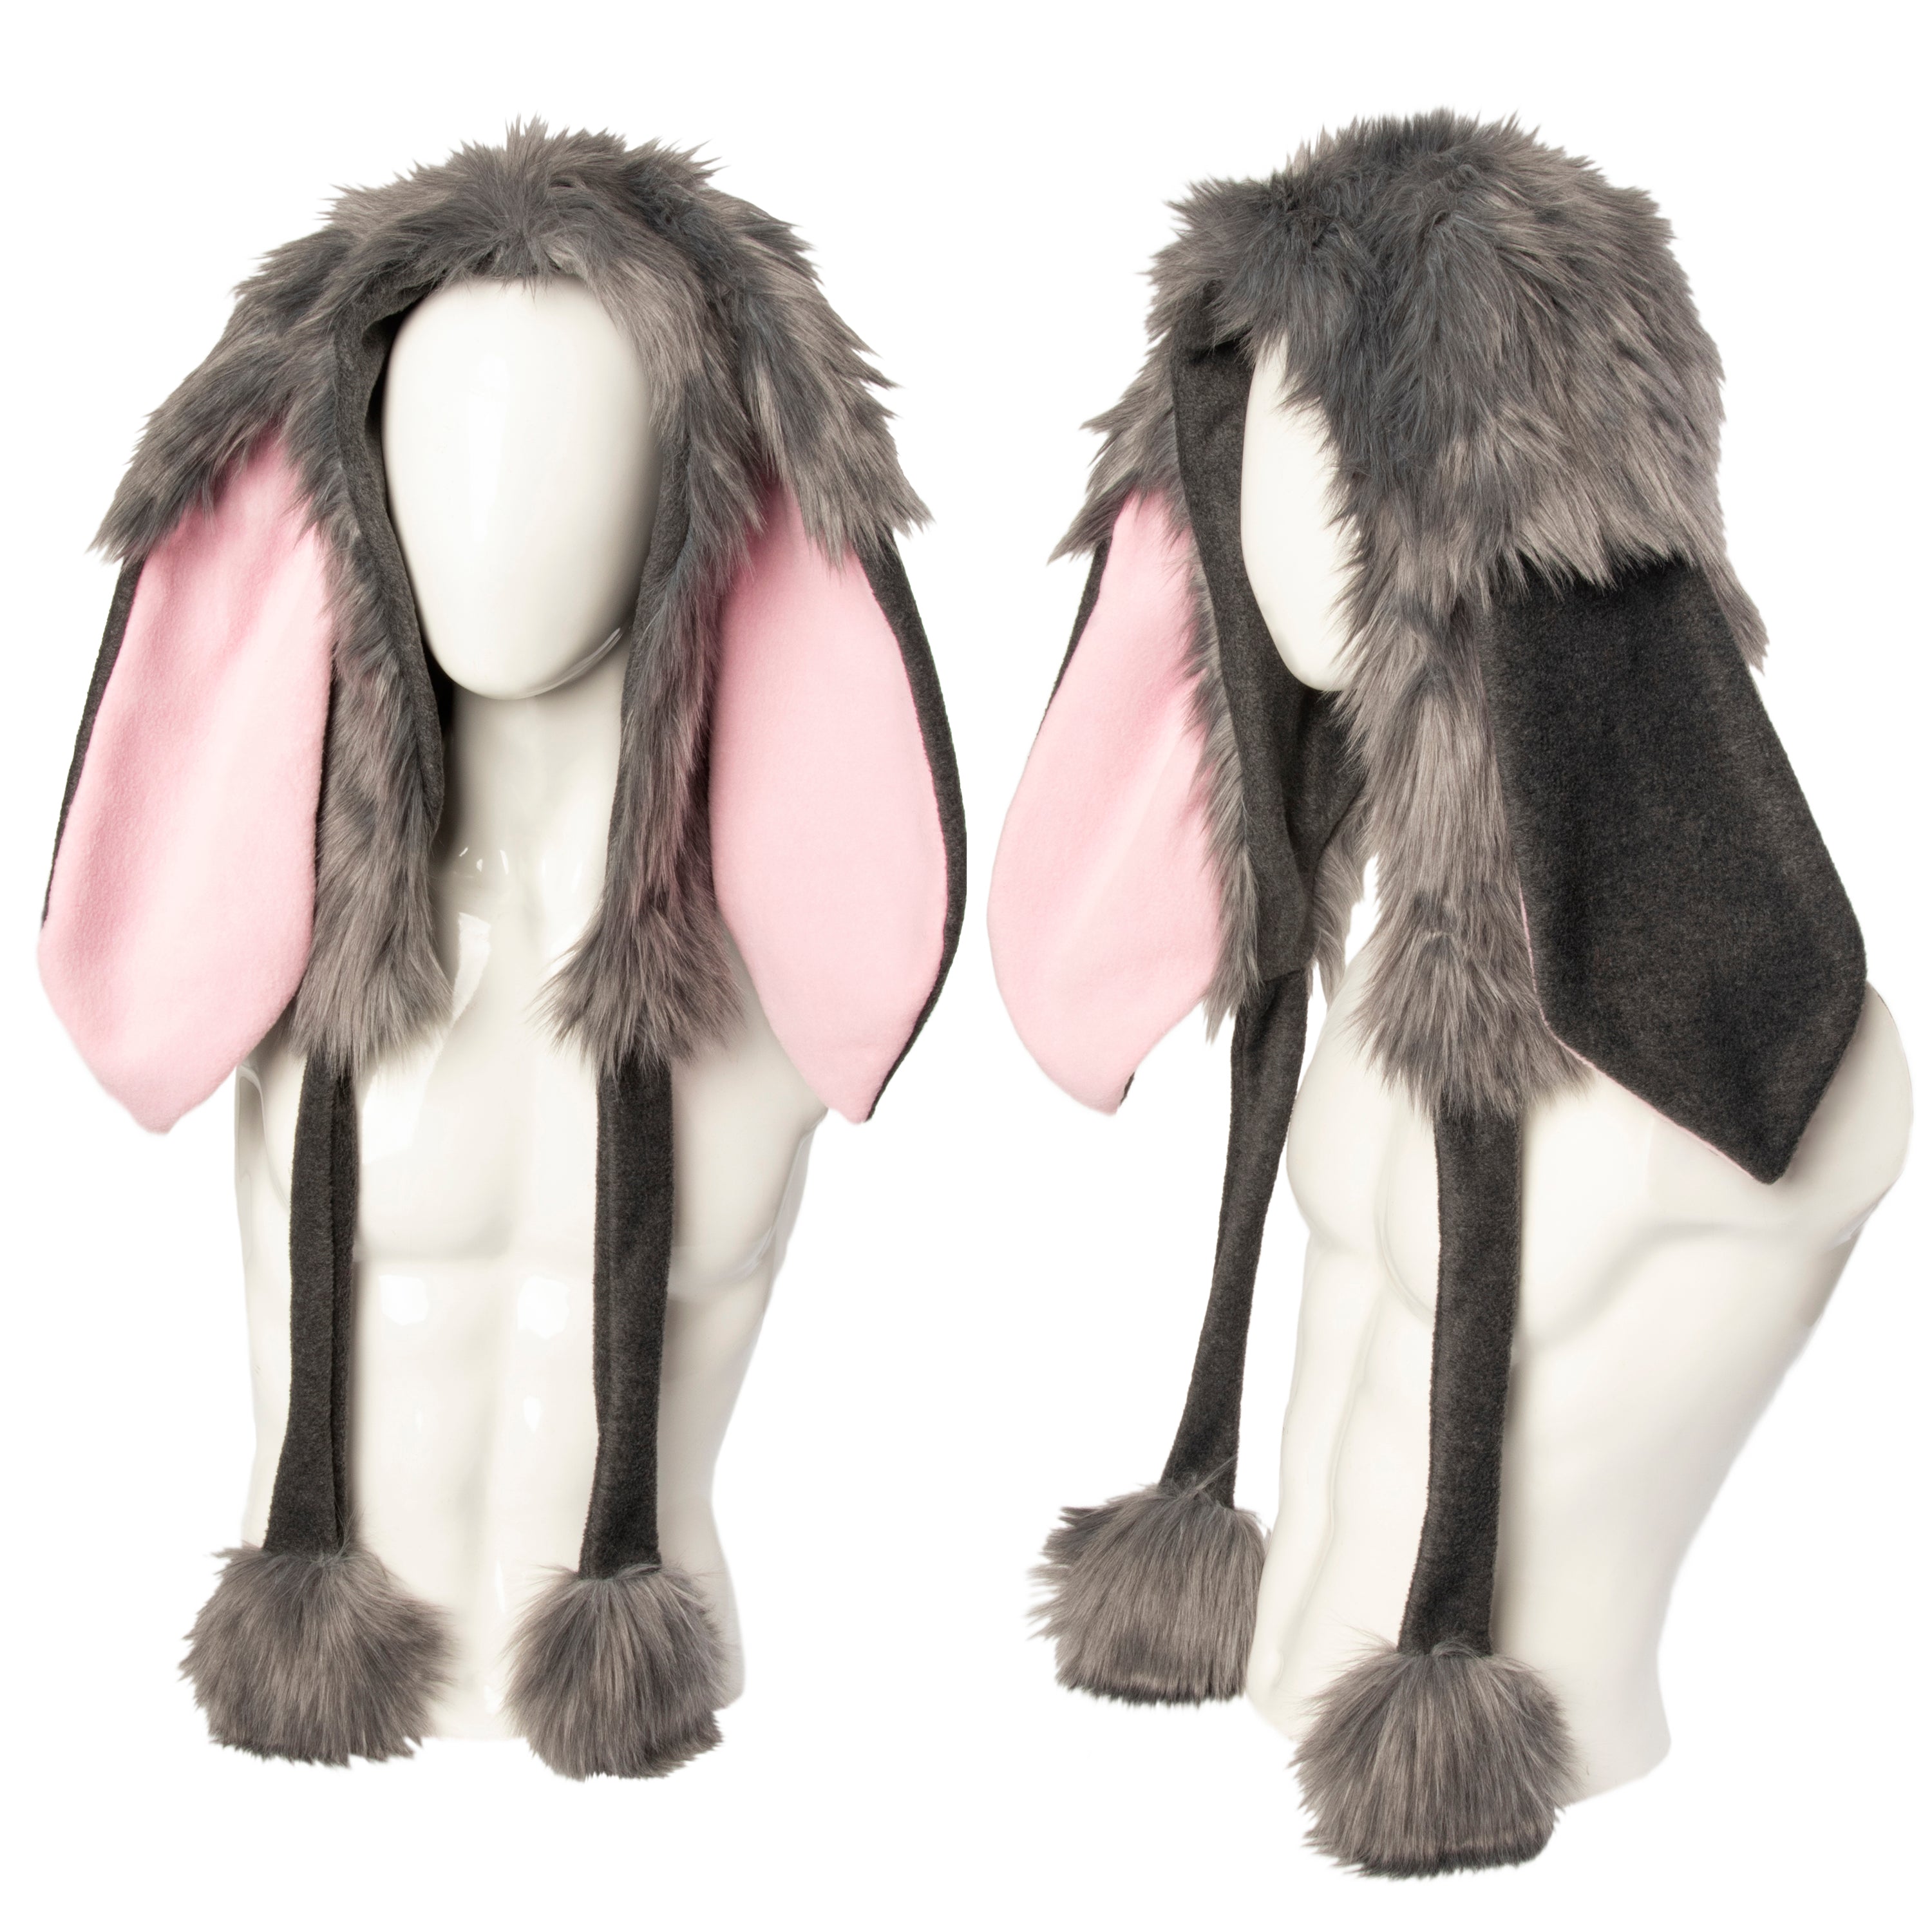 Bunny Nybble Puffet Hood - Pawstar Pawstar Hoods bunny, cosplay, costume, furry, hat, ship-15, ship-15day